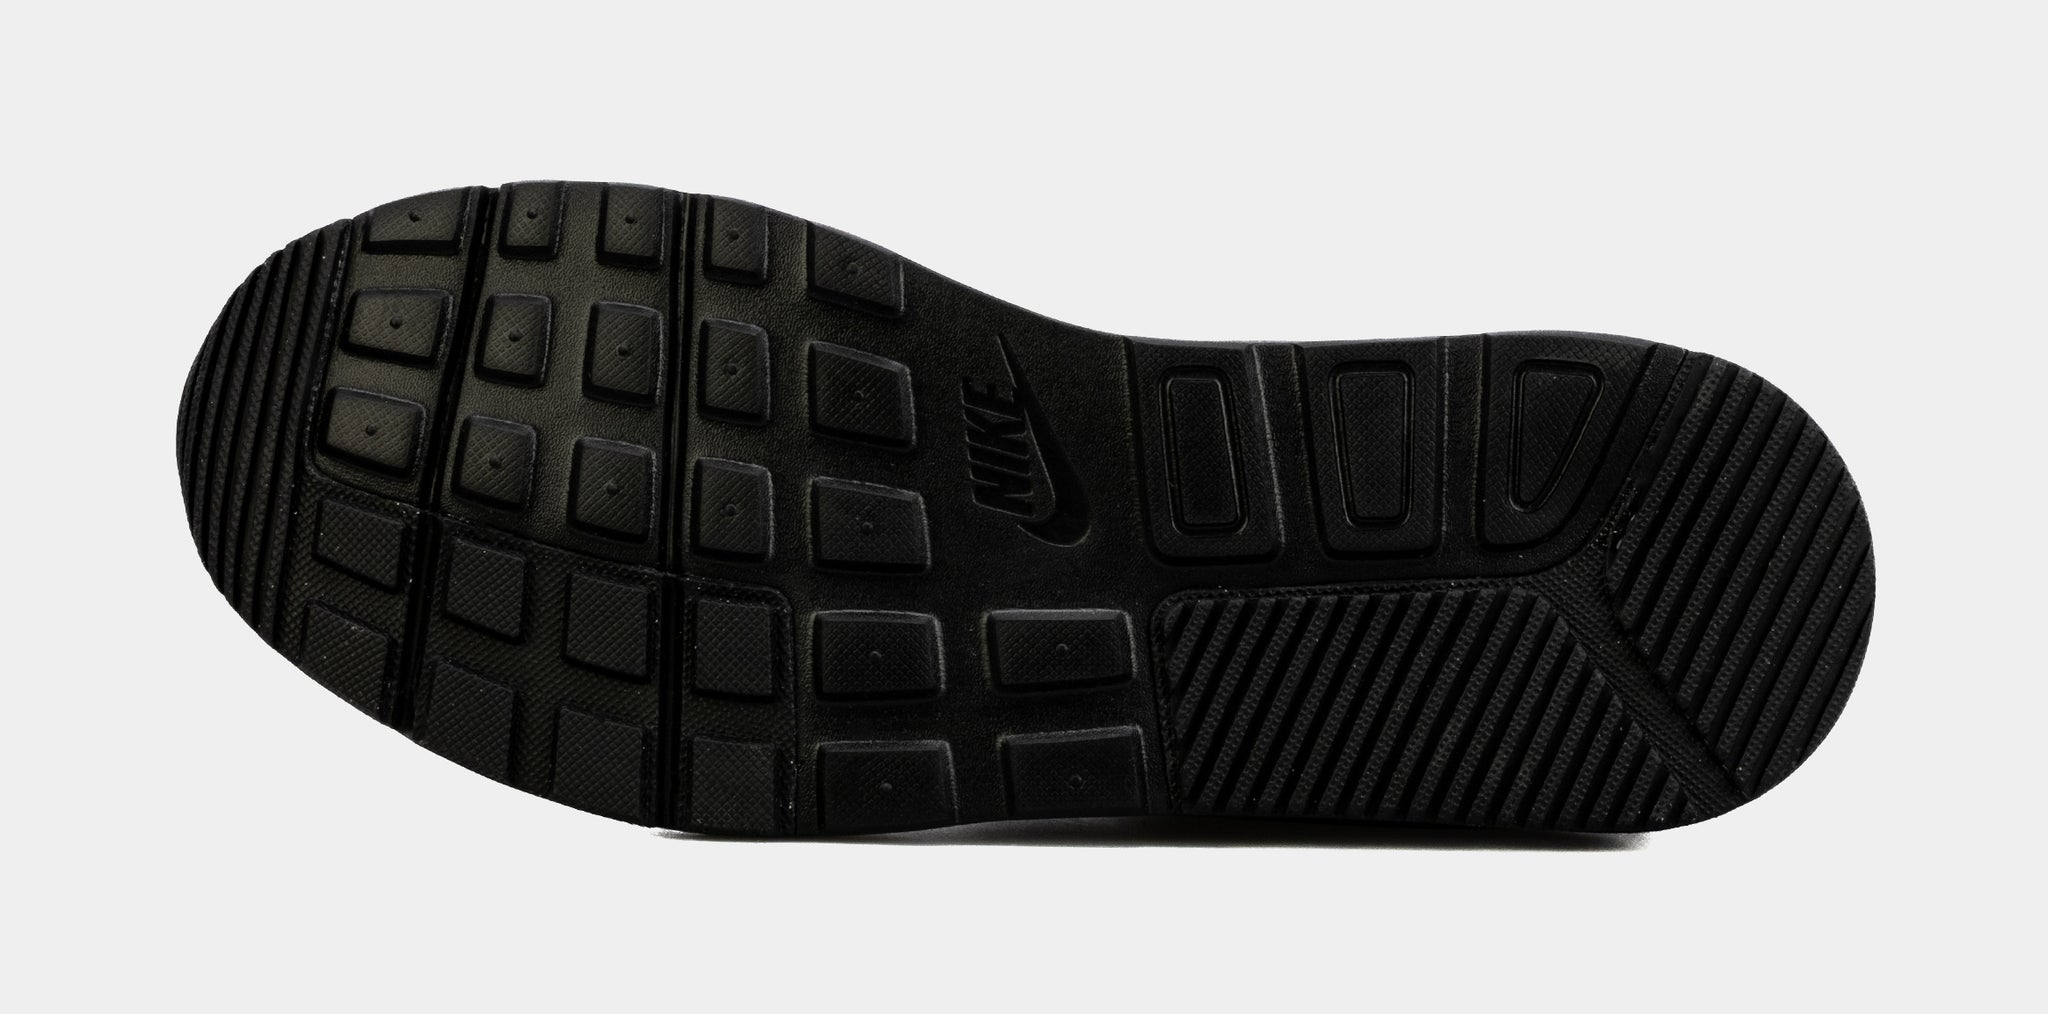 Nike Air Max SC Mens Running Shoes Black CW4555-003 – Shoe Palace